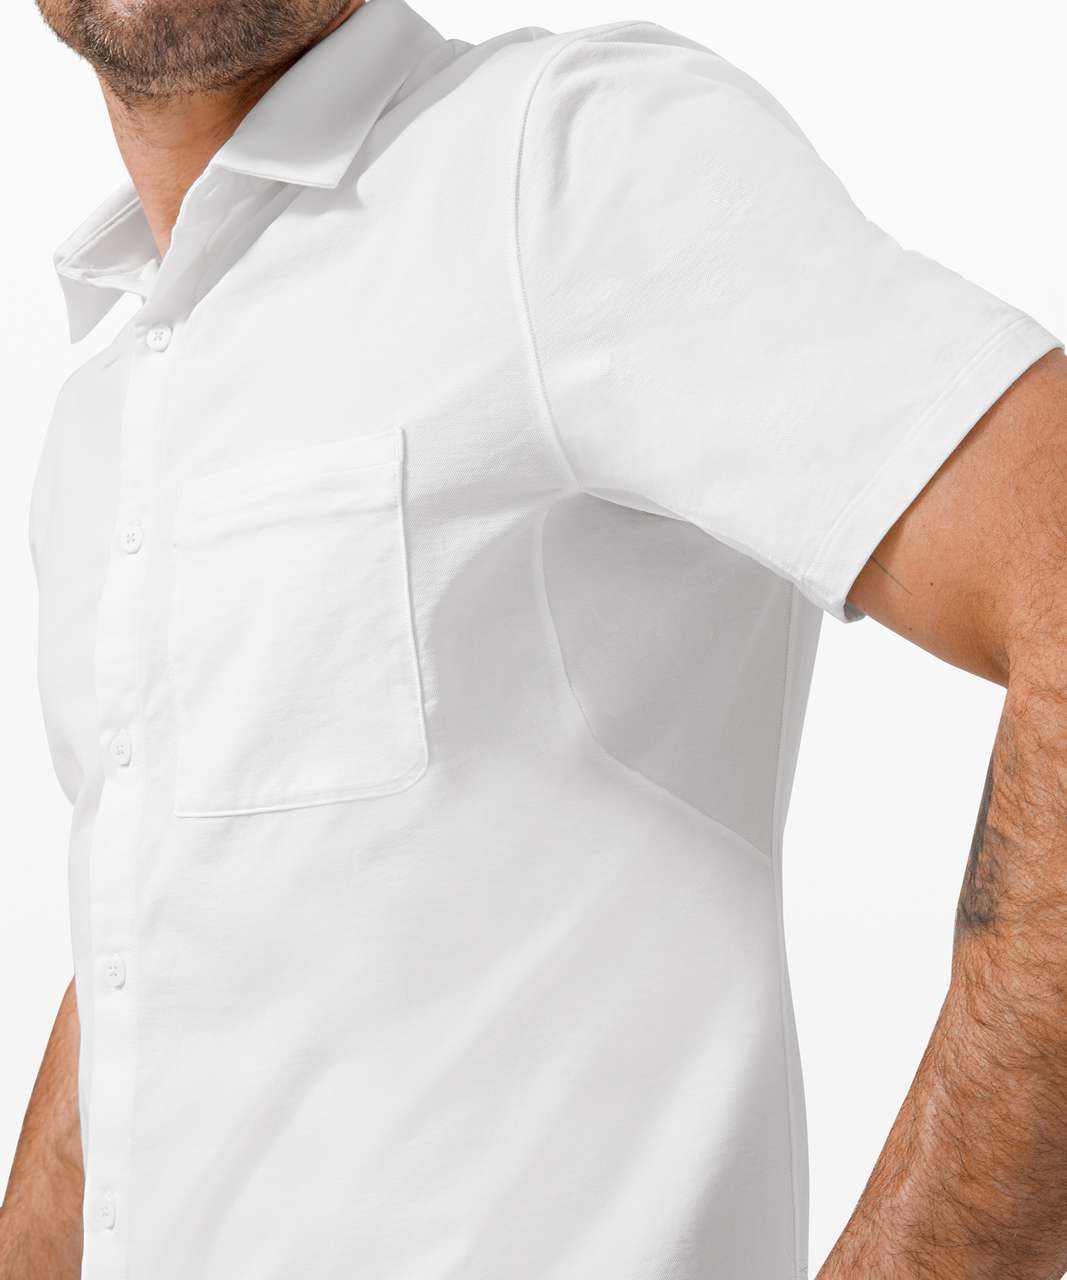 Lululemon Commission Short Sleeve Shirt - White (First Release)